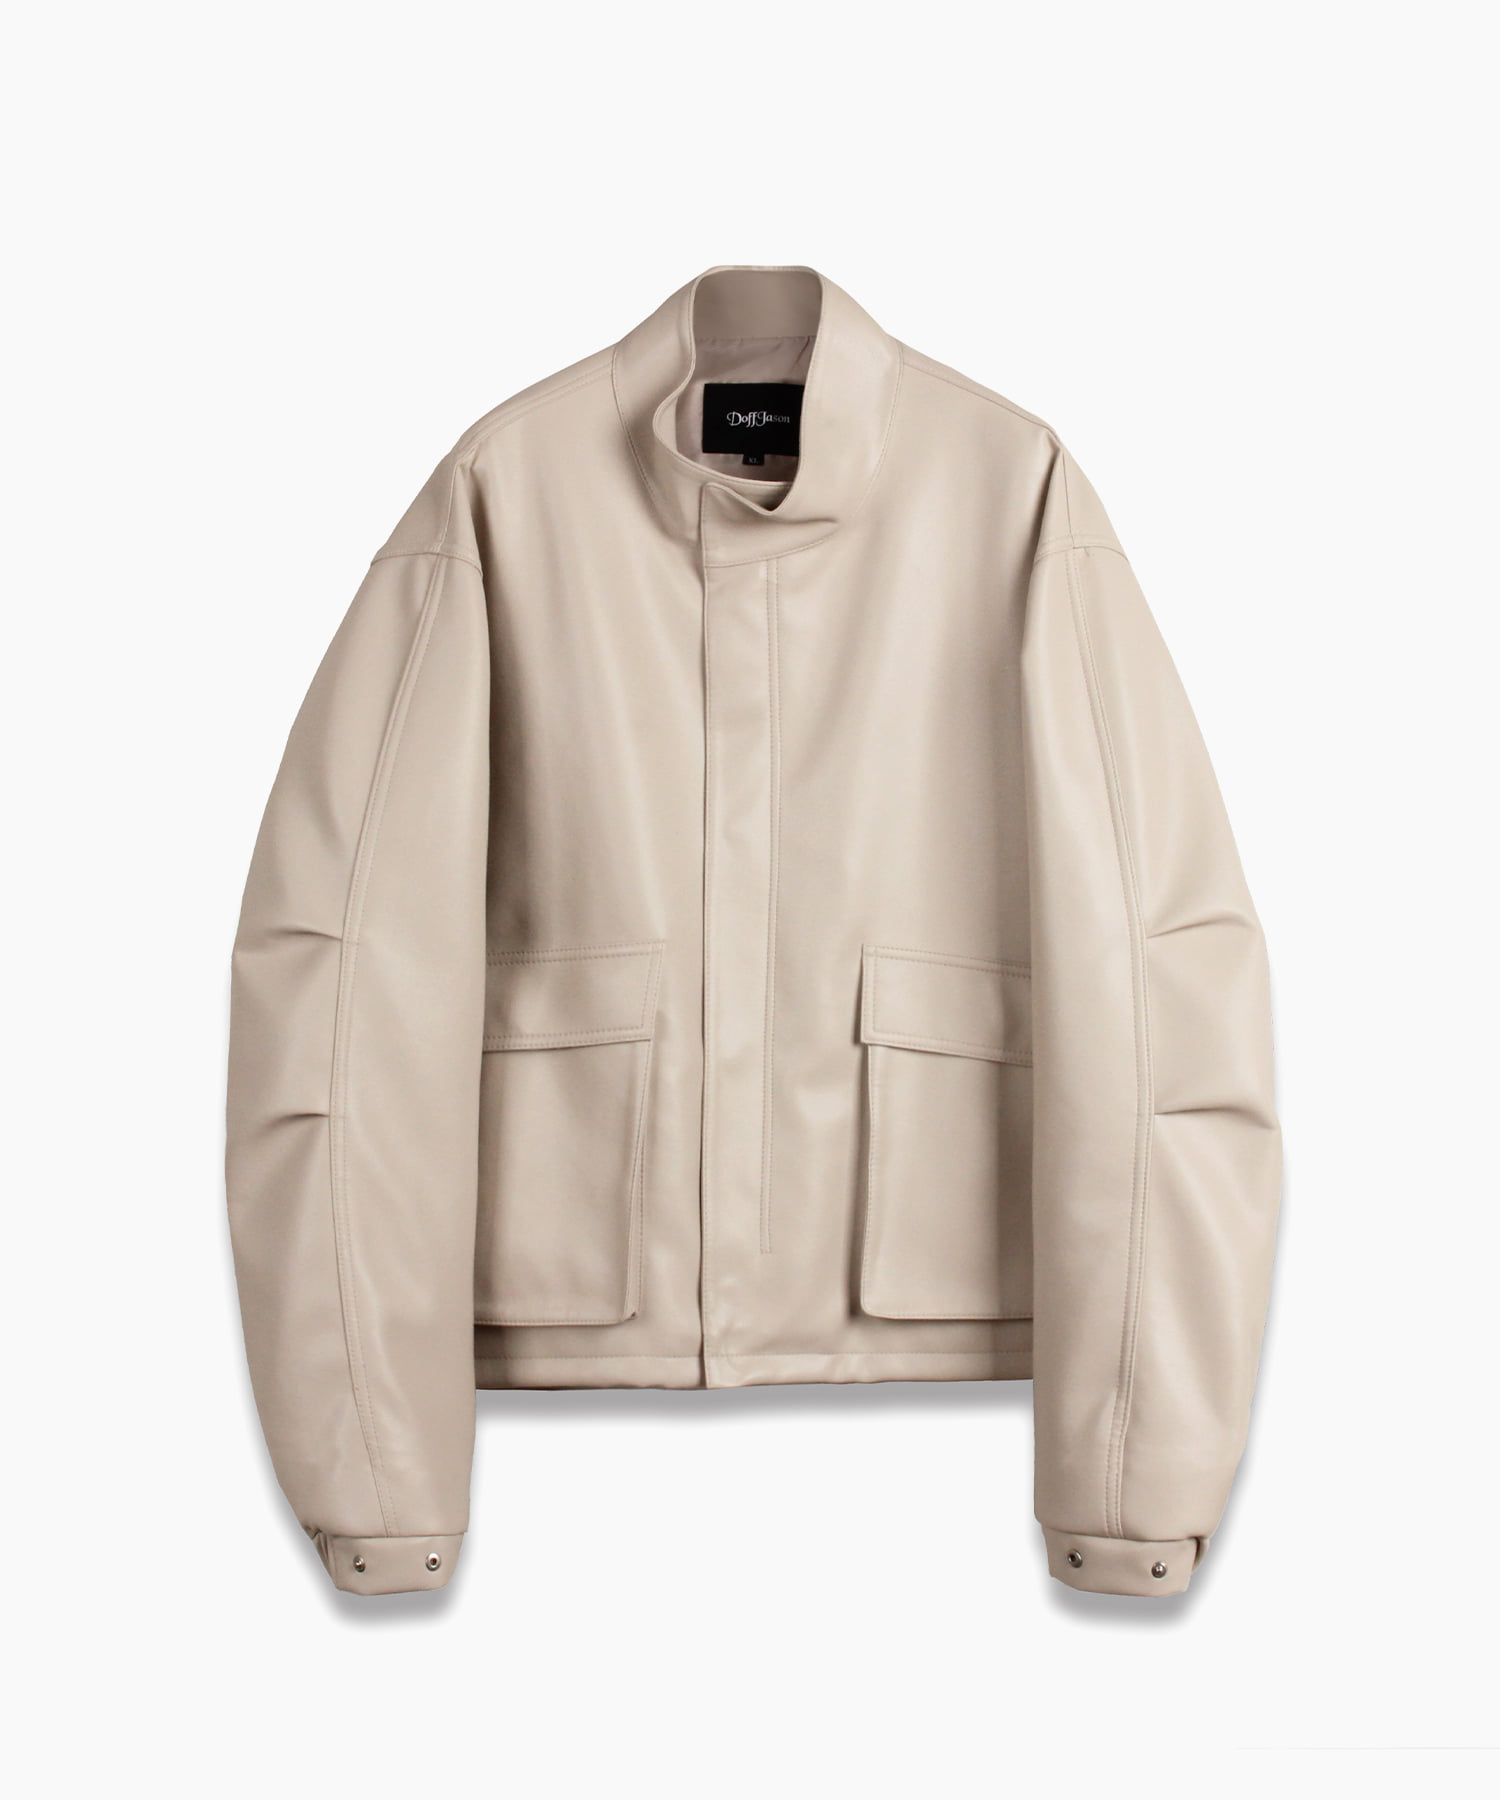 Overfit vegan leather blouson jacket (ivory)